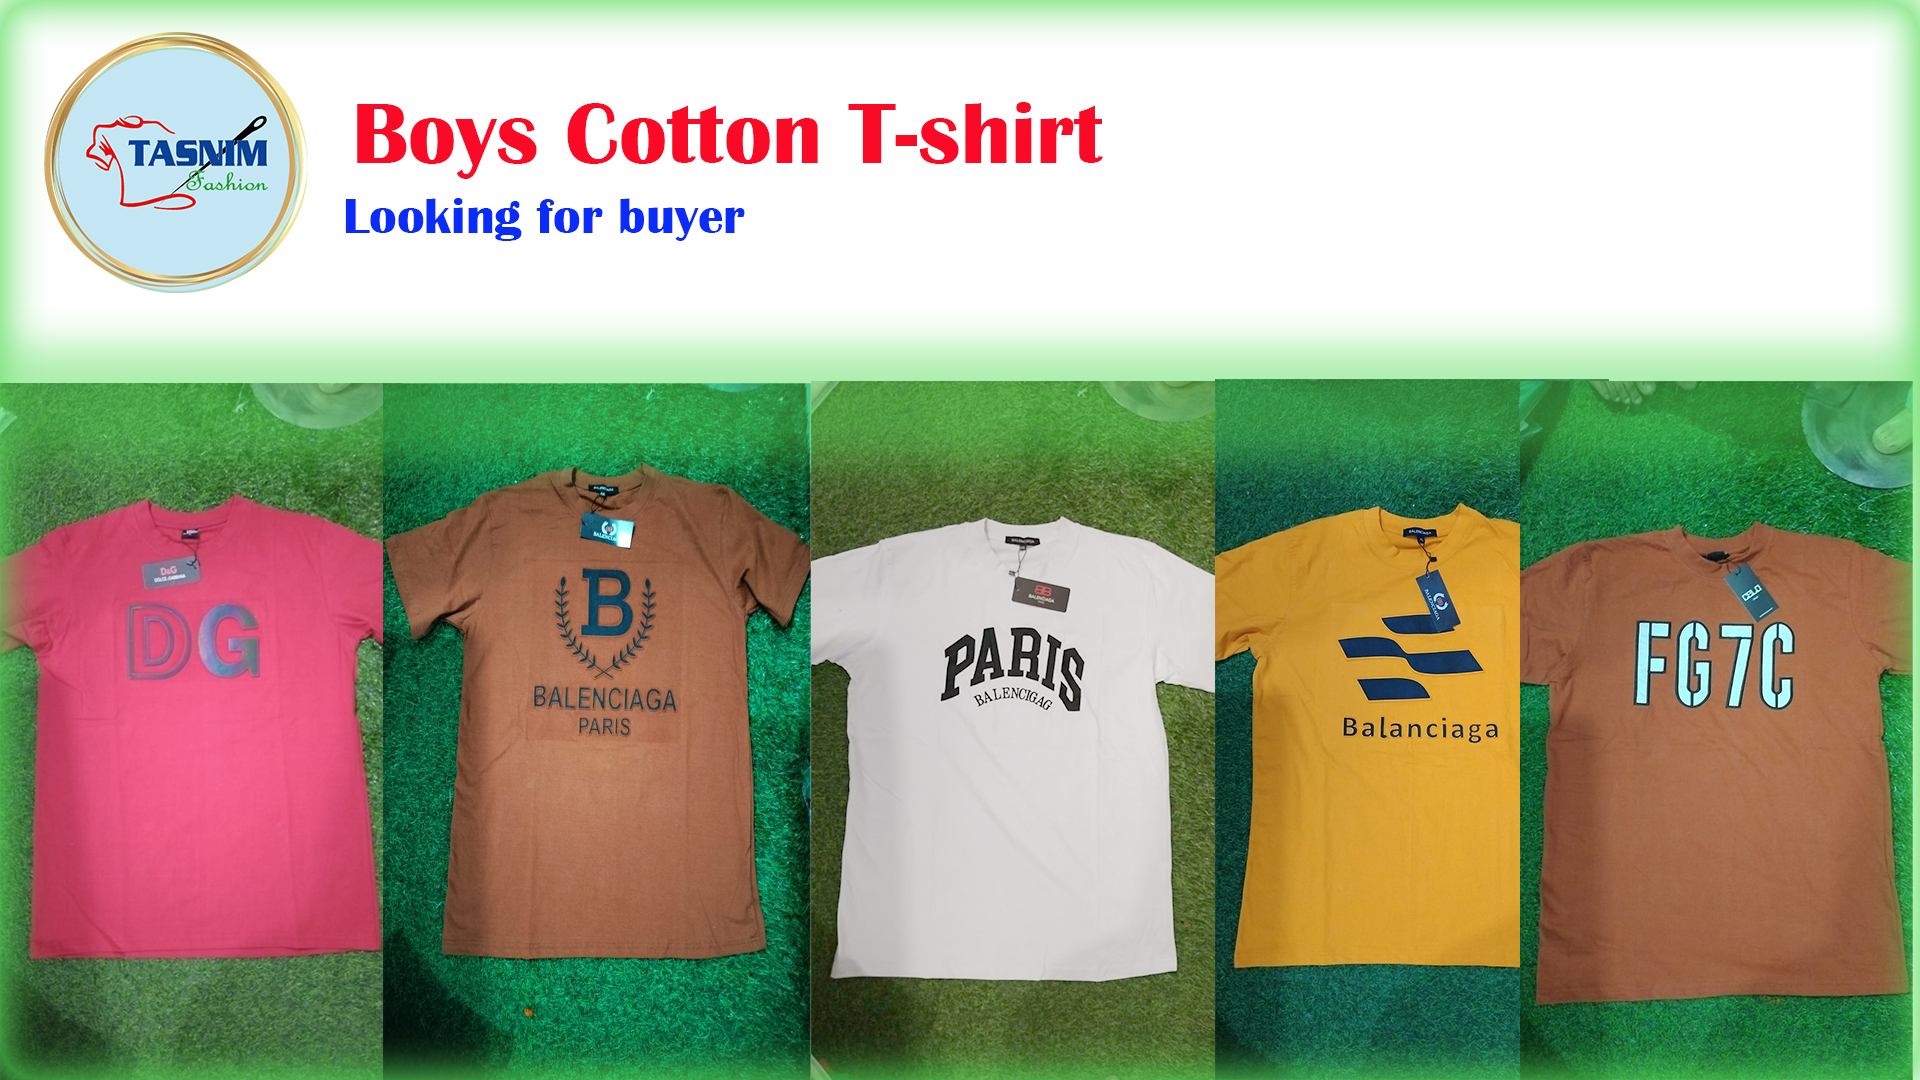 Boys cotton t-shirt